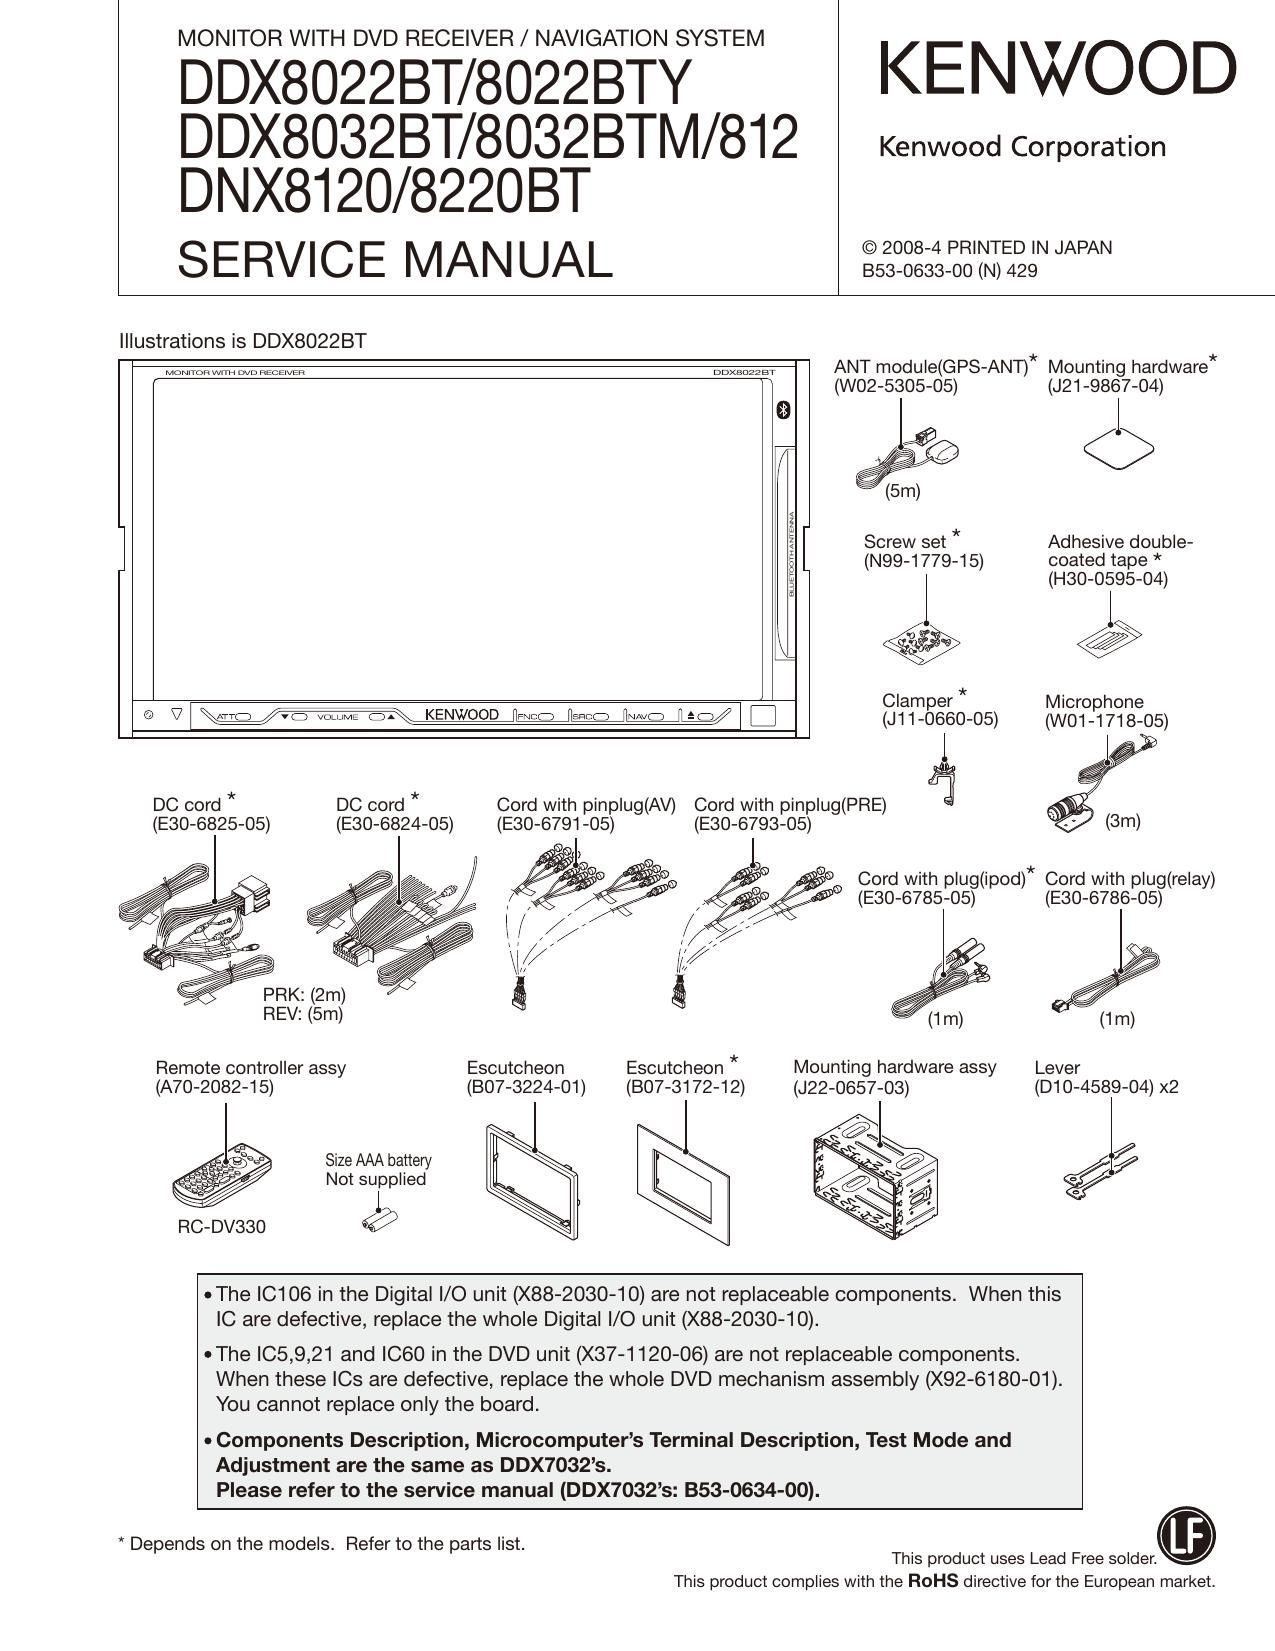 Kenwood DDX 8022 BTY Service Manual